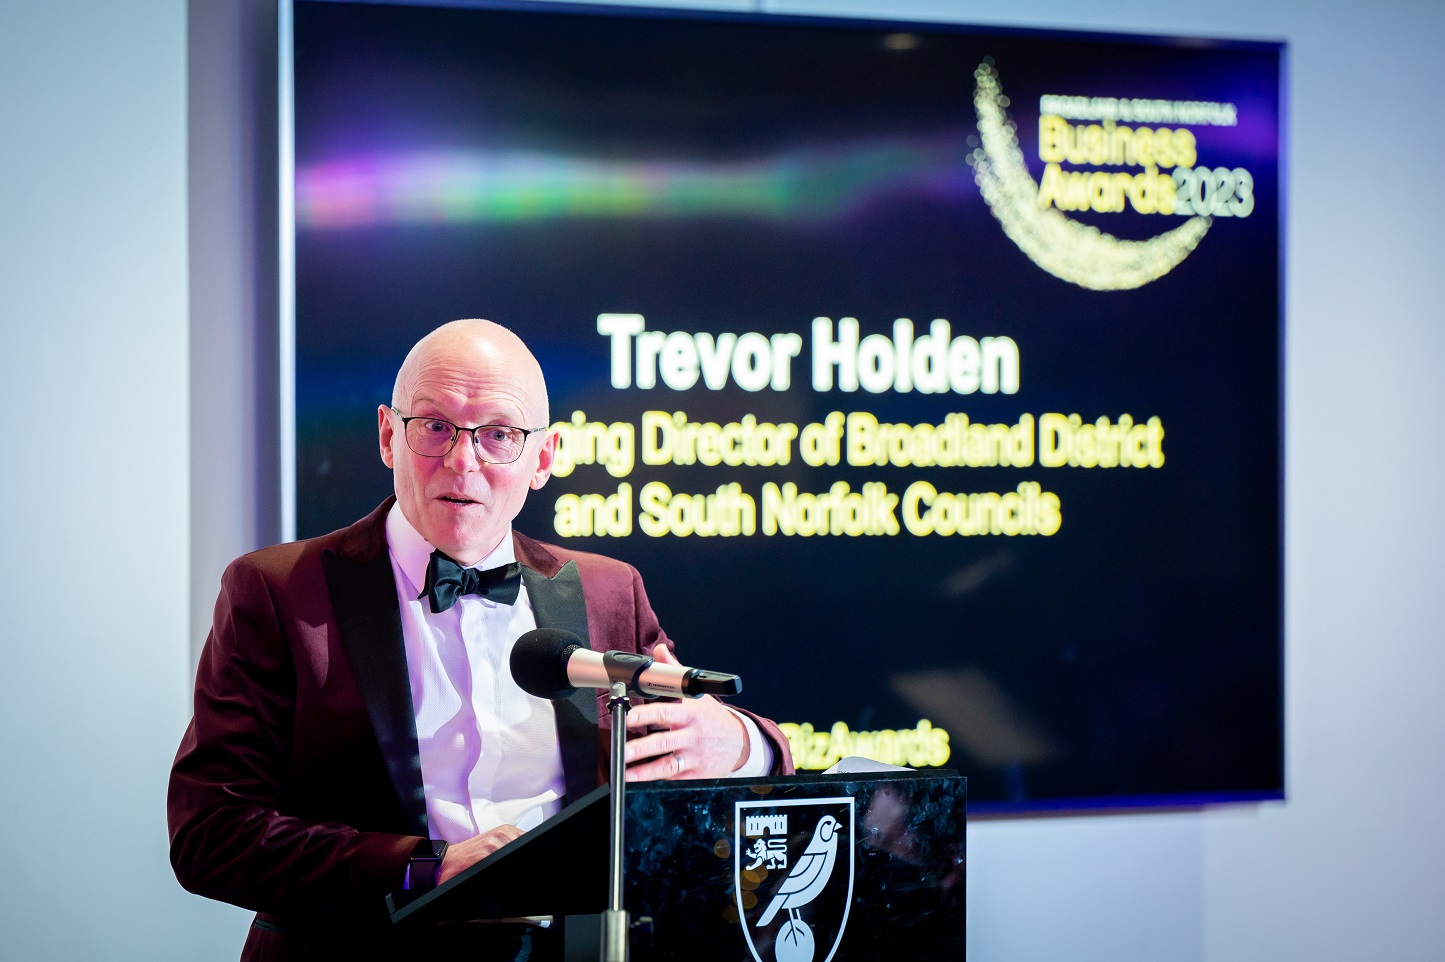 Trevor Holden Managing Direct of Broadland and South Norfolk Councils at 2023 Business Awards